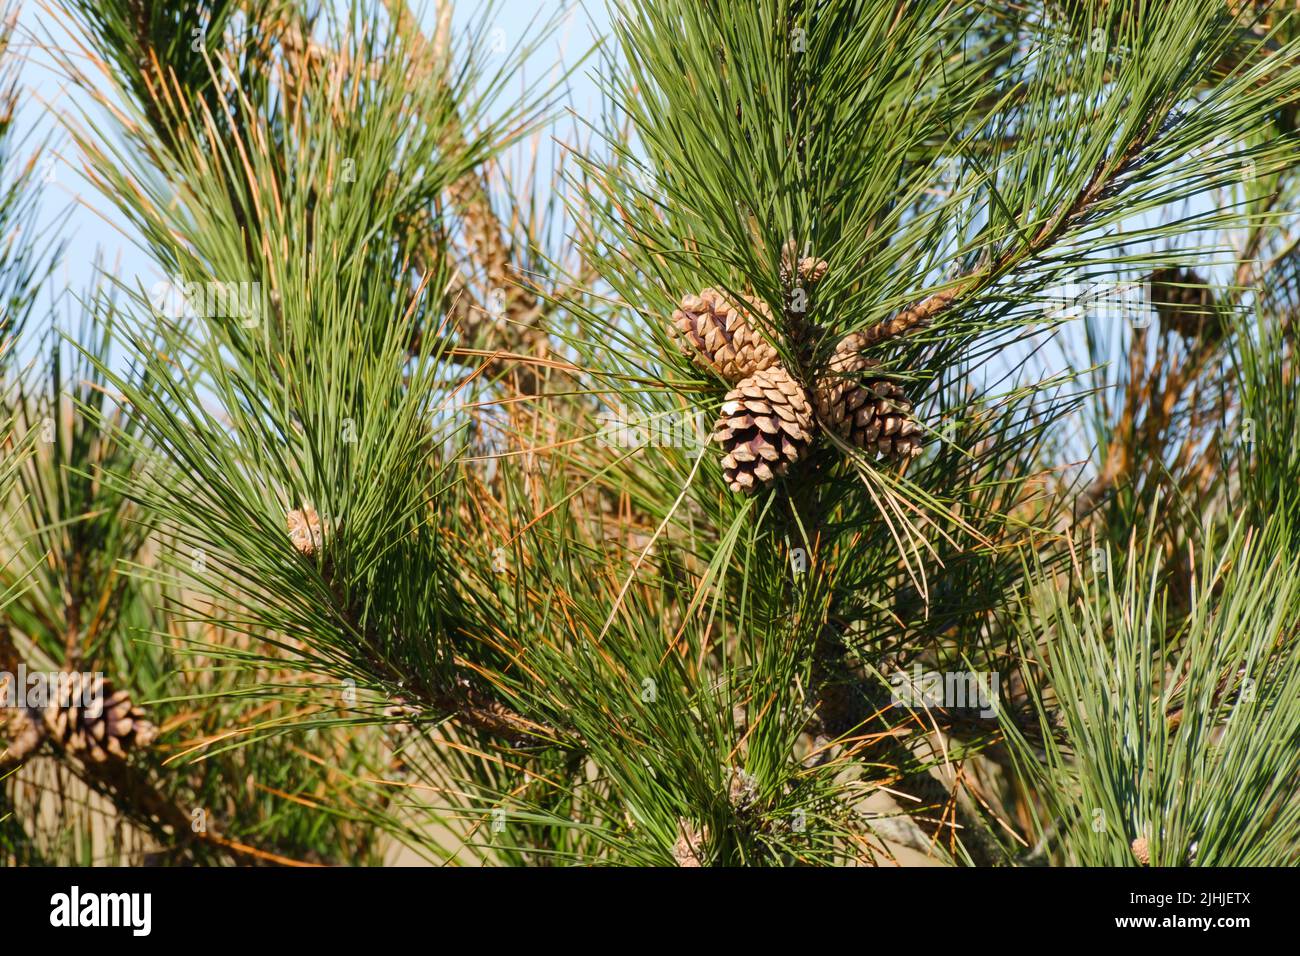 Pine cone at a shrub Stock Photo